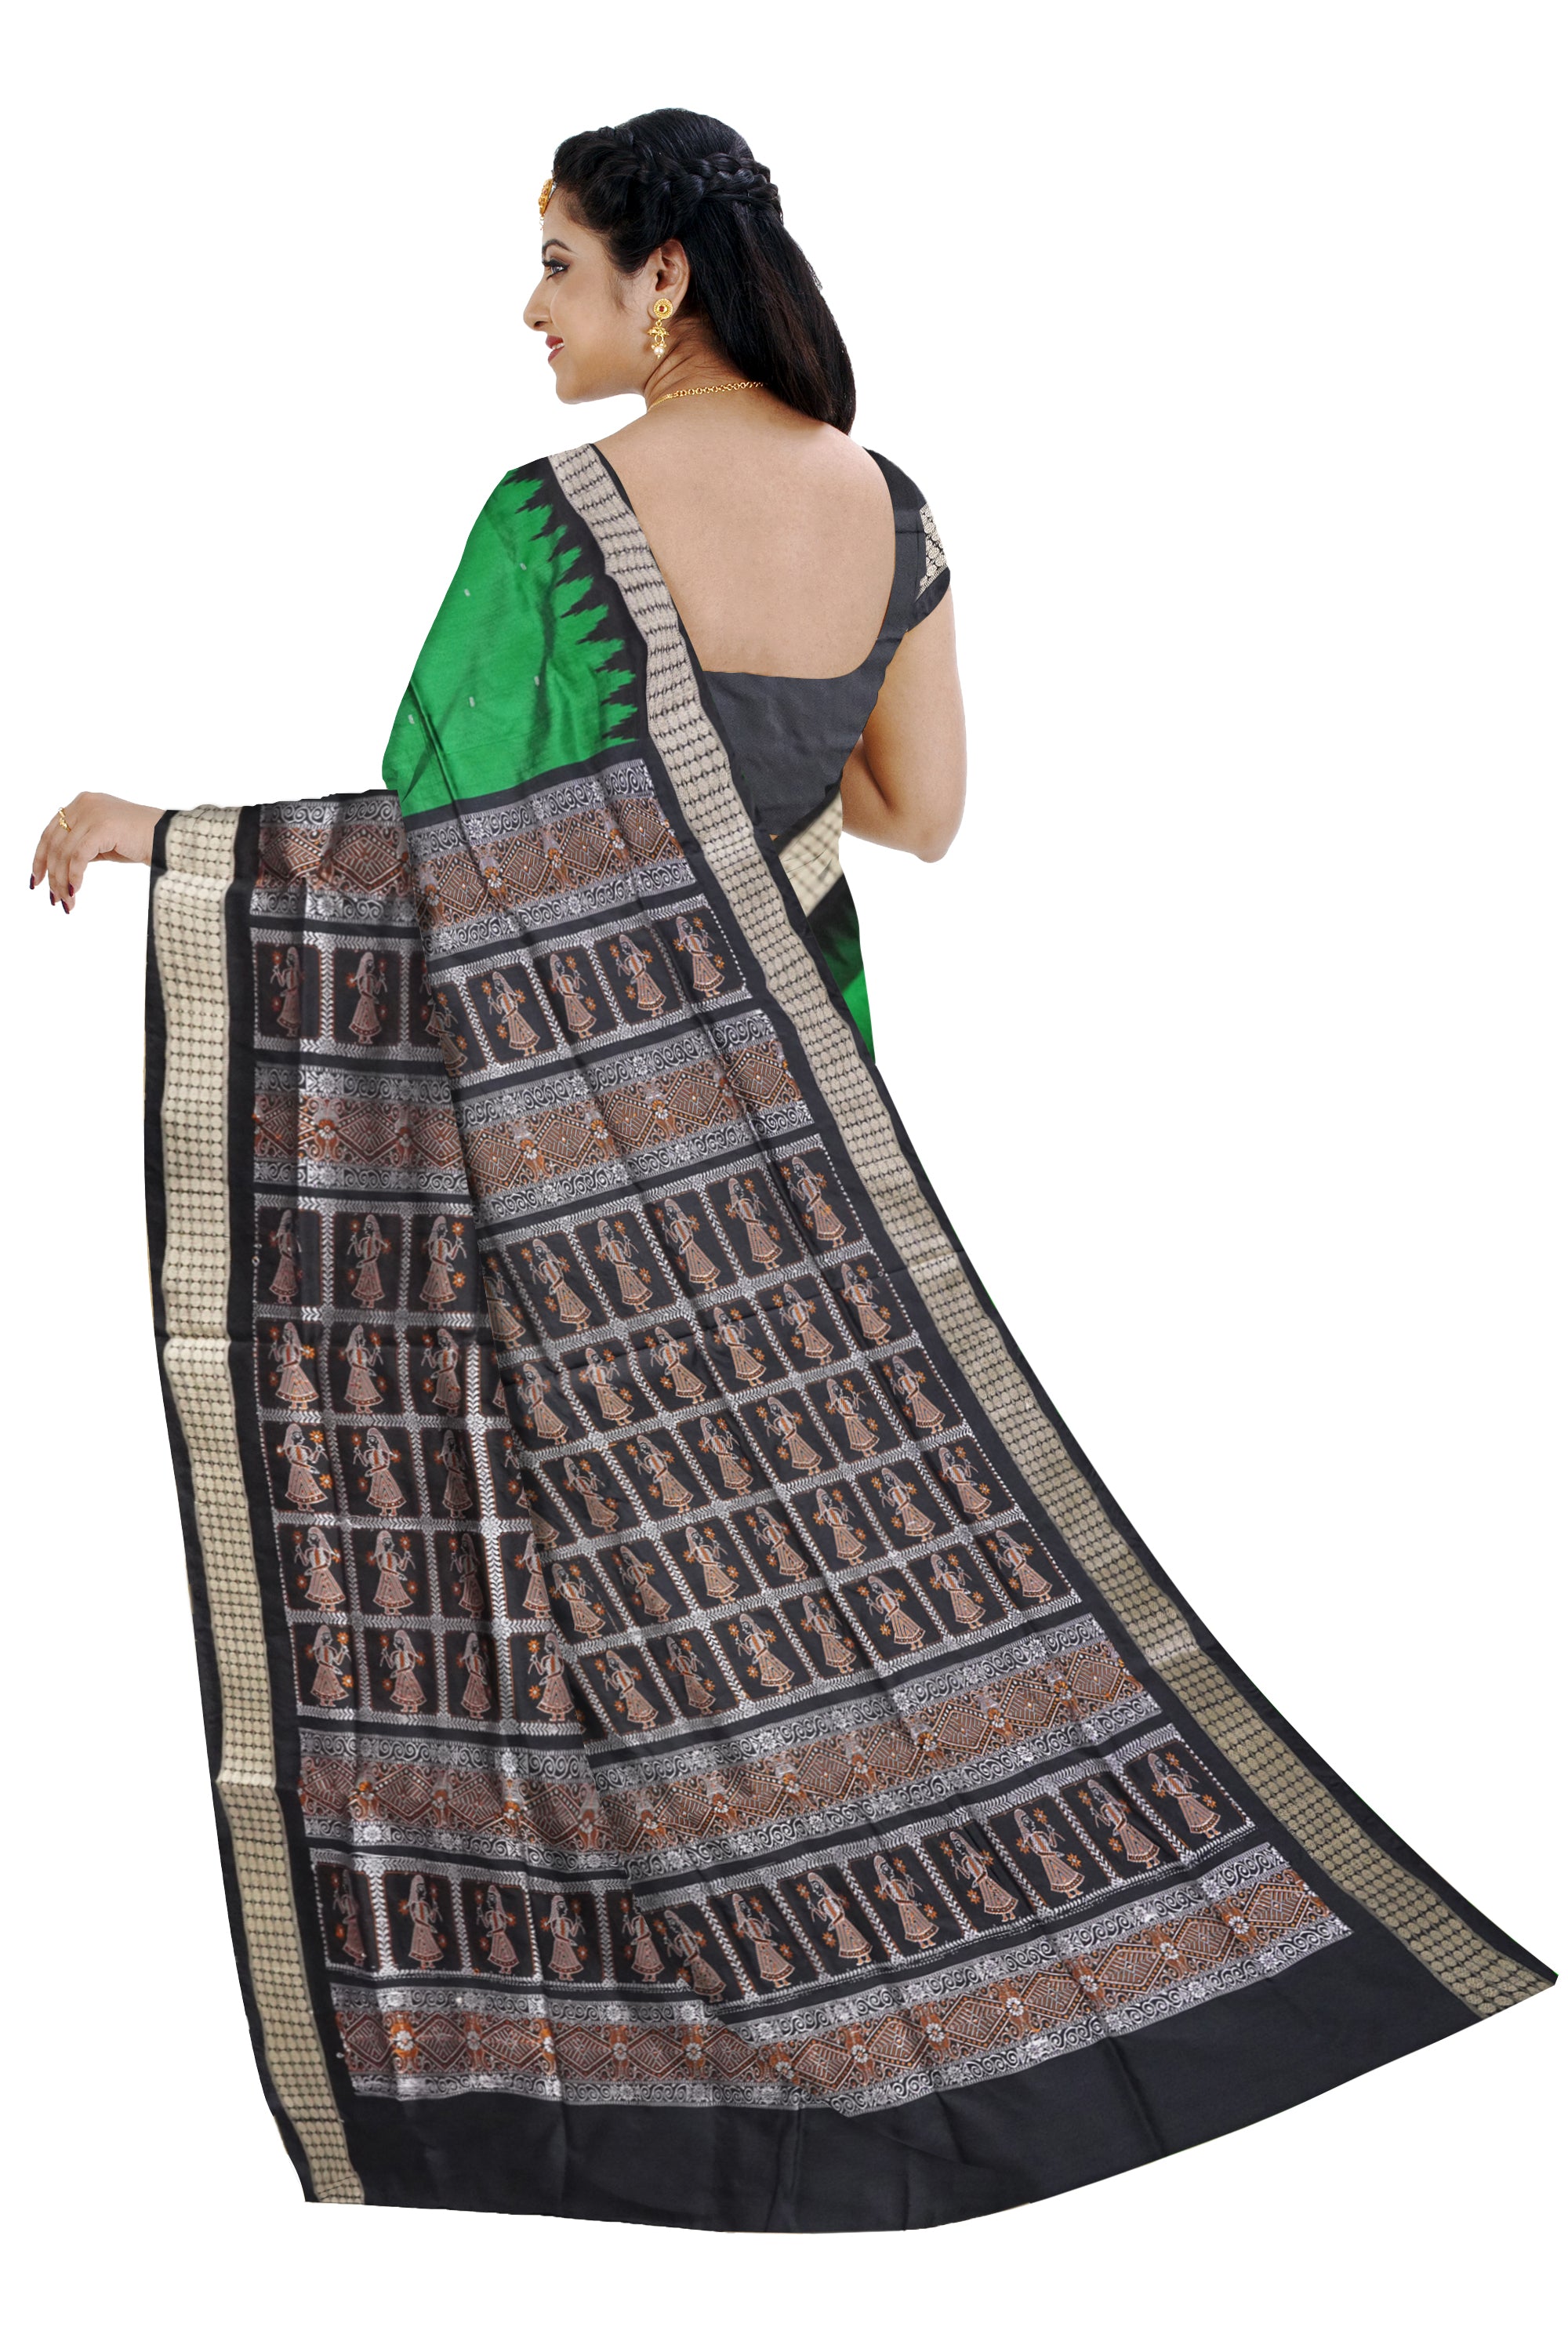 Green and black pata saree, plain body, doll pattern pallu. - Koshali Arts & Crafts Enterprise